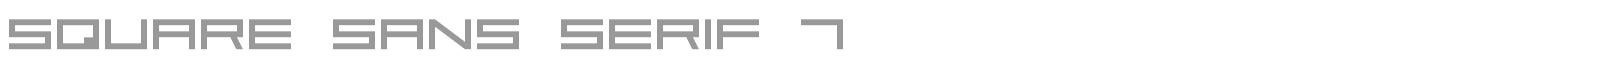 Font Square Sans Serif 7